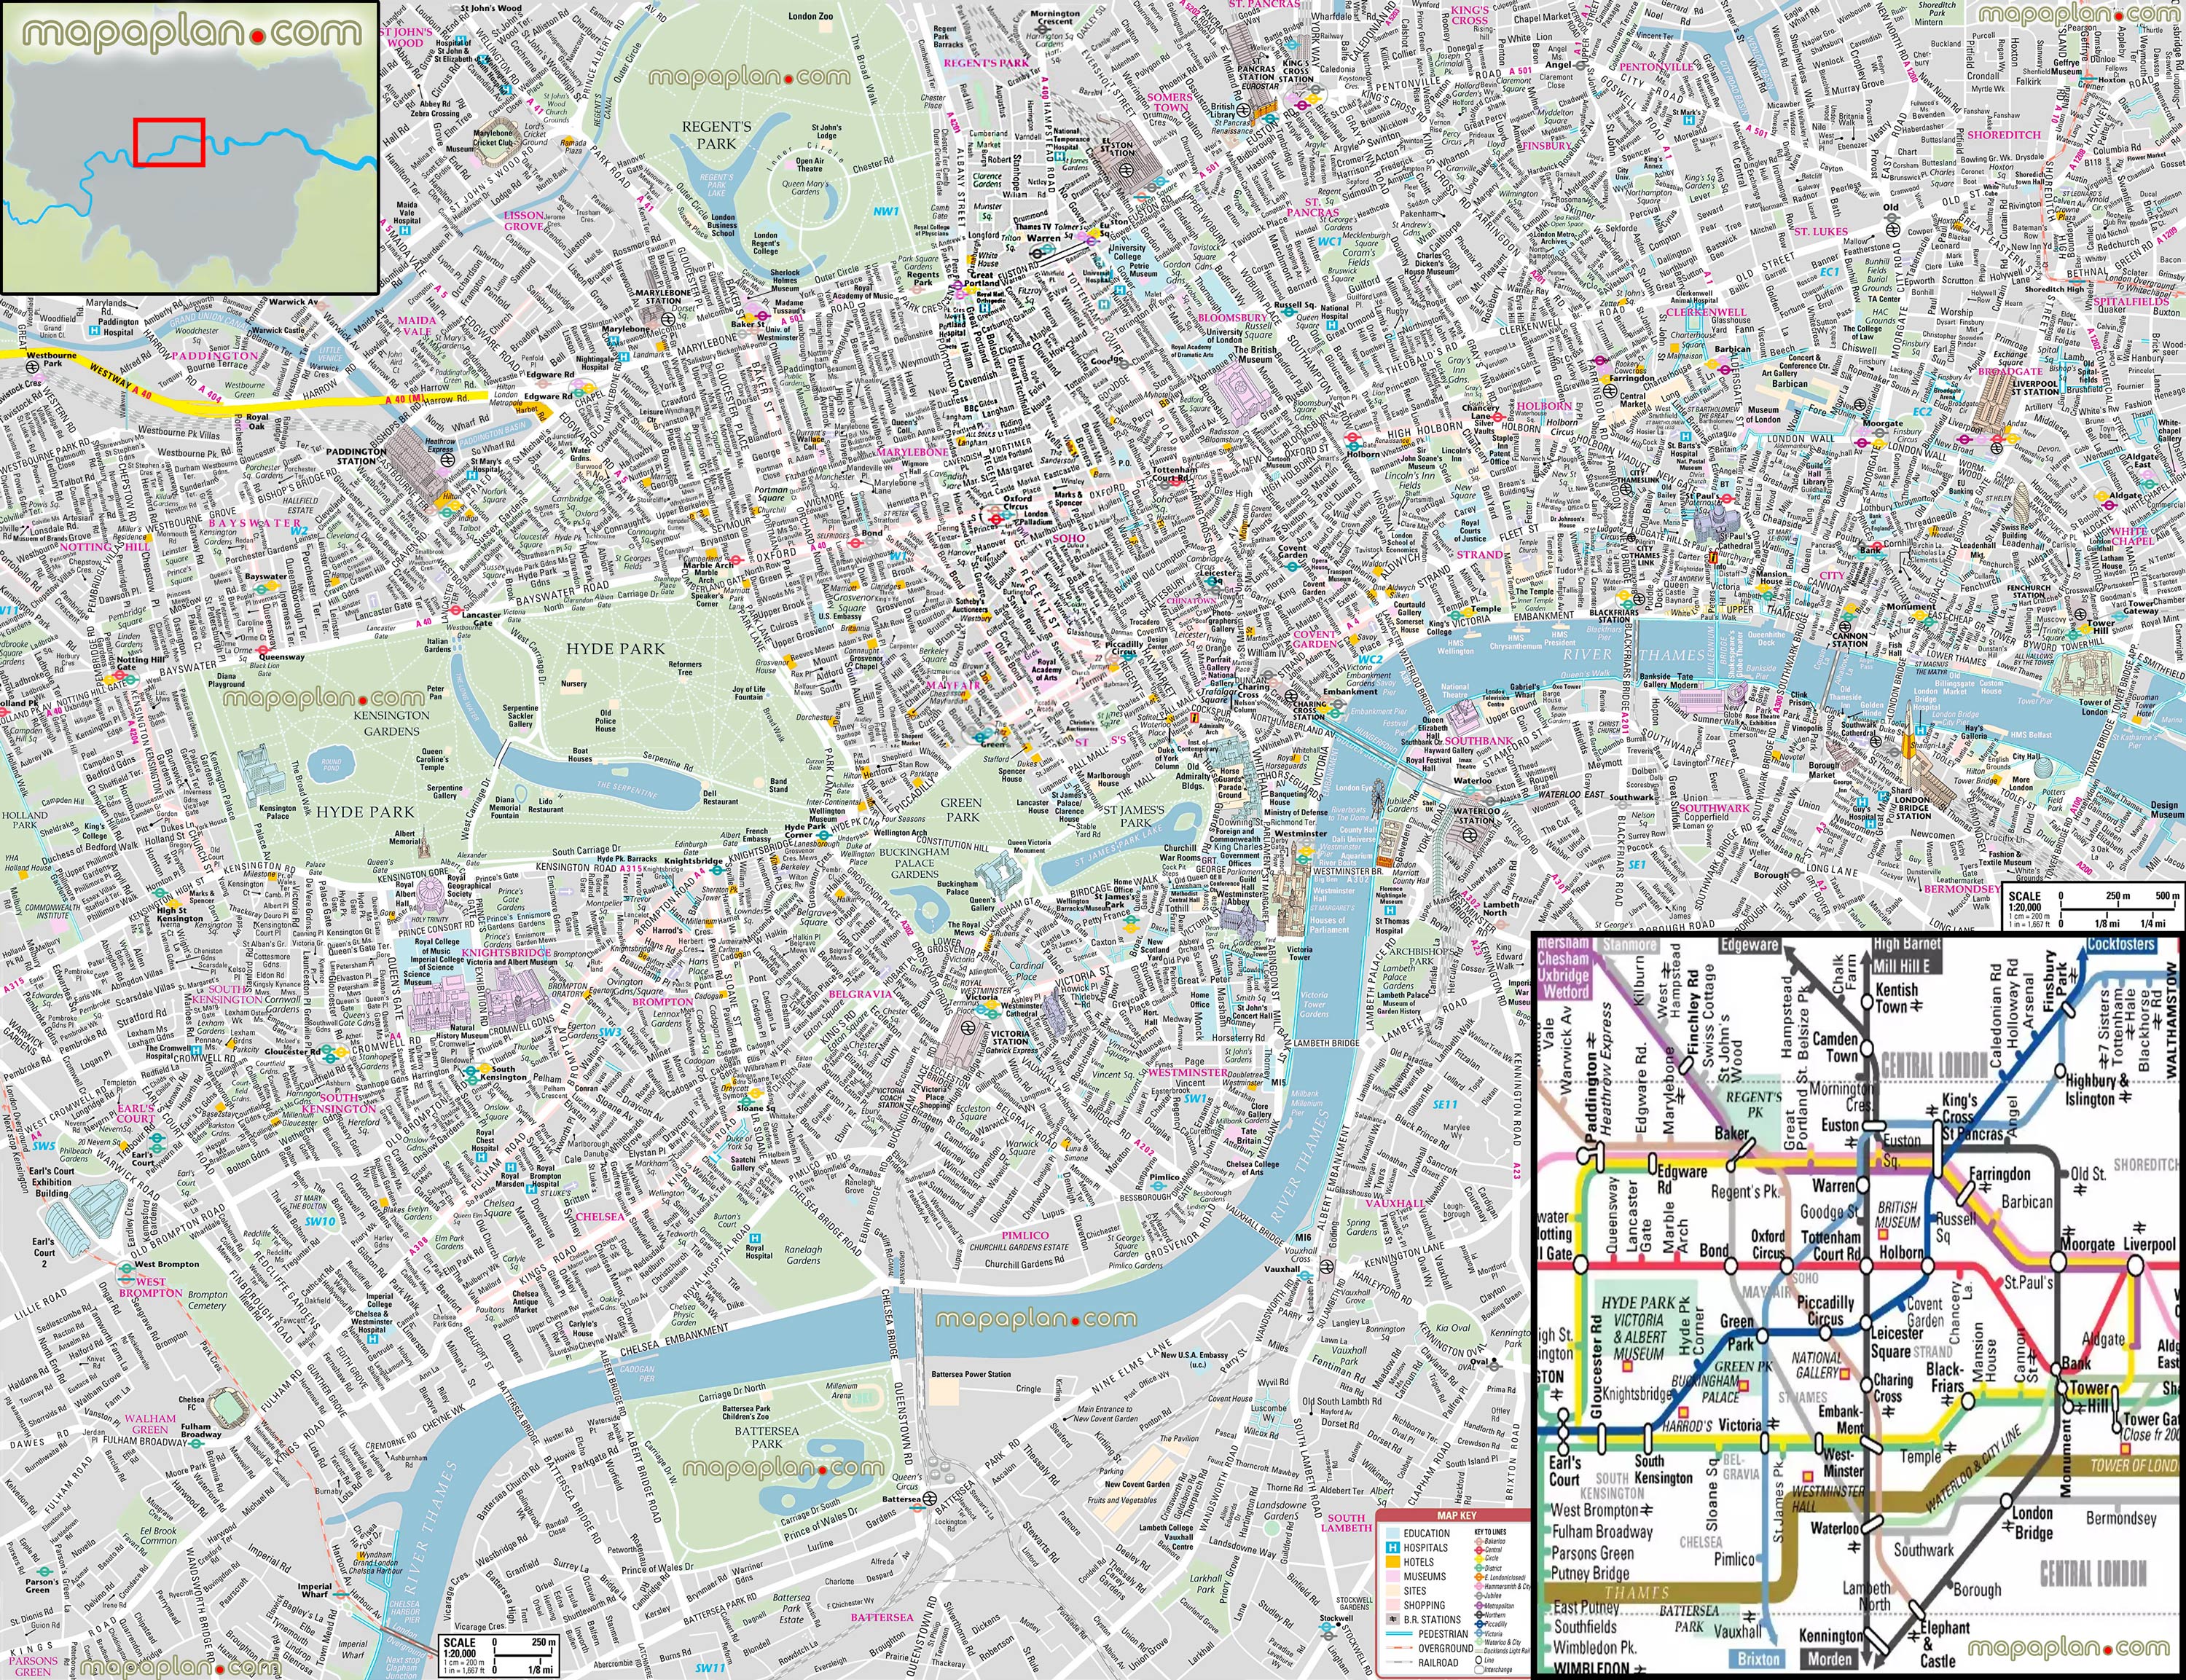 city-map-of-london-uk-afp-cv